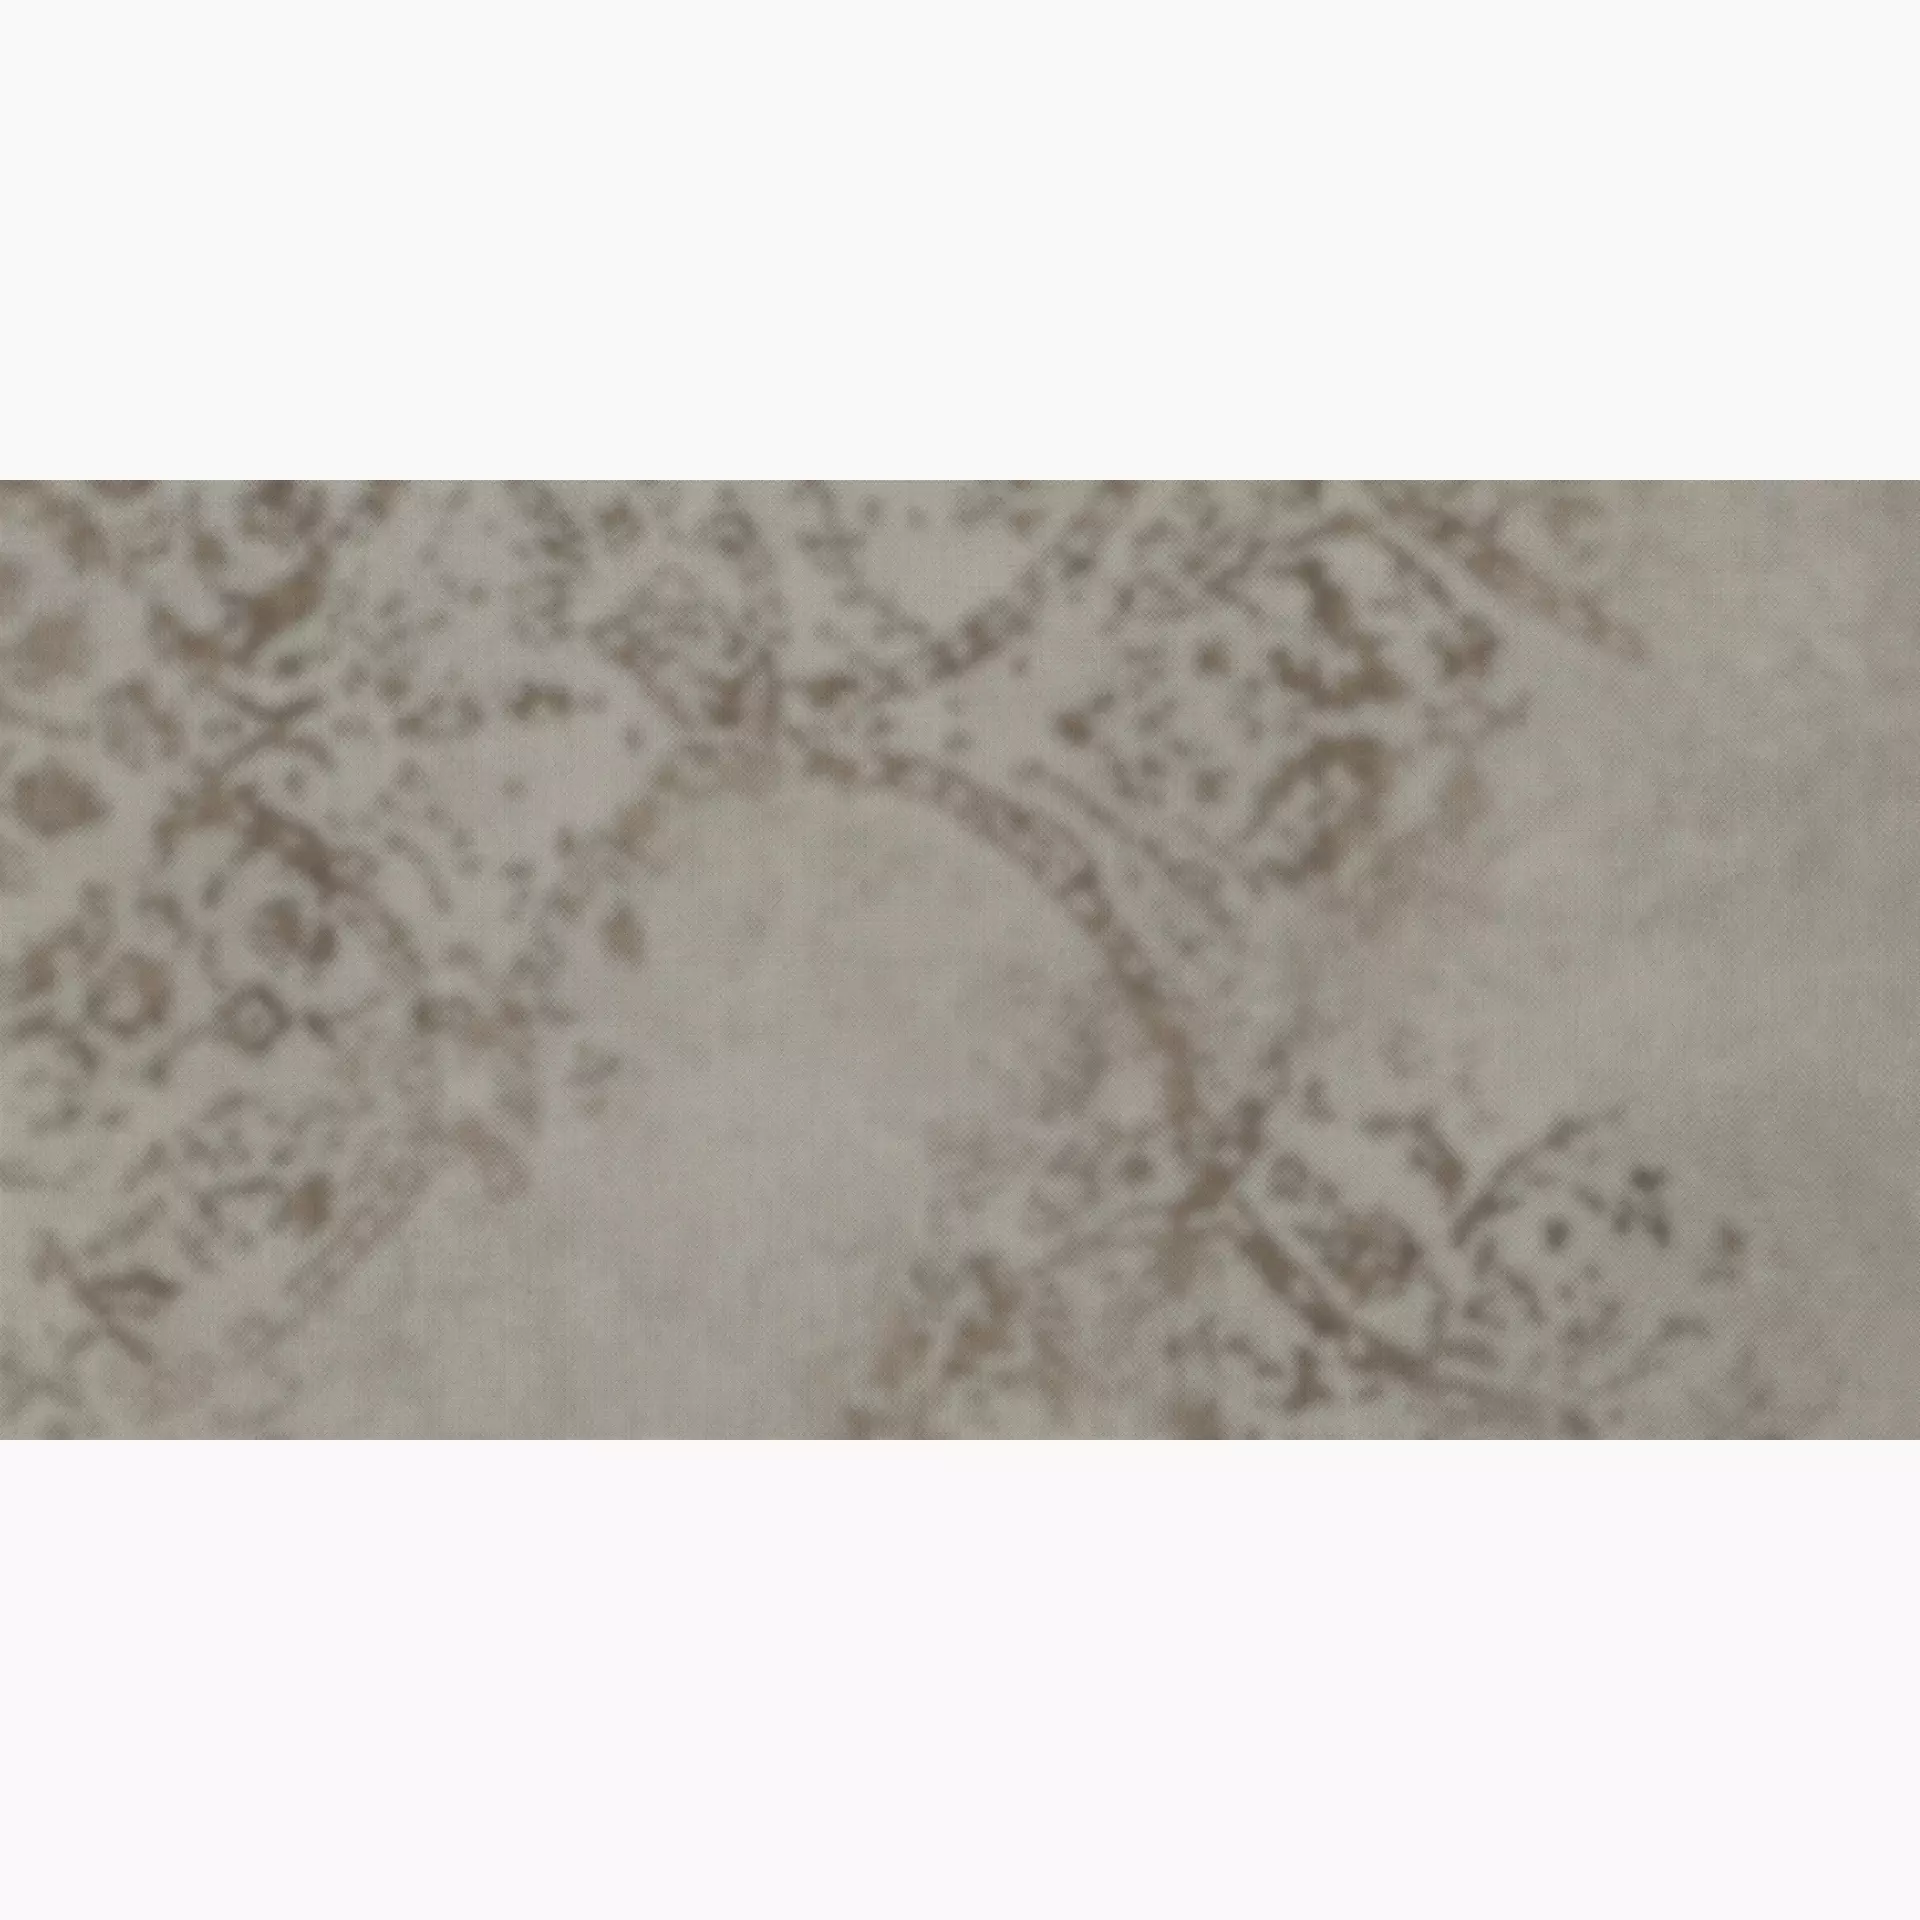 Marazzi Grand Carpet Design Smoke Naturale MQKA 120x240cm rectified 6mm